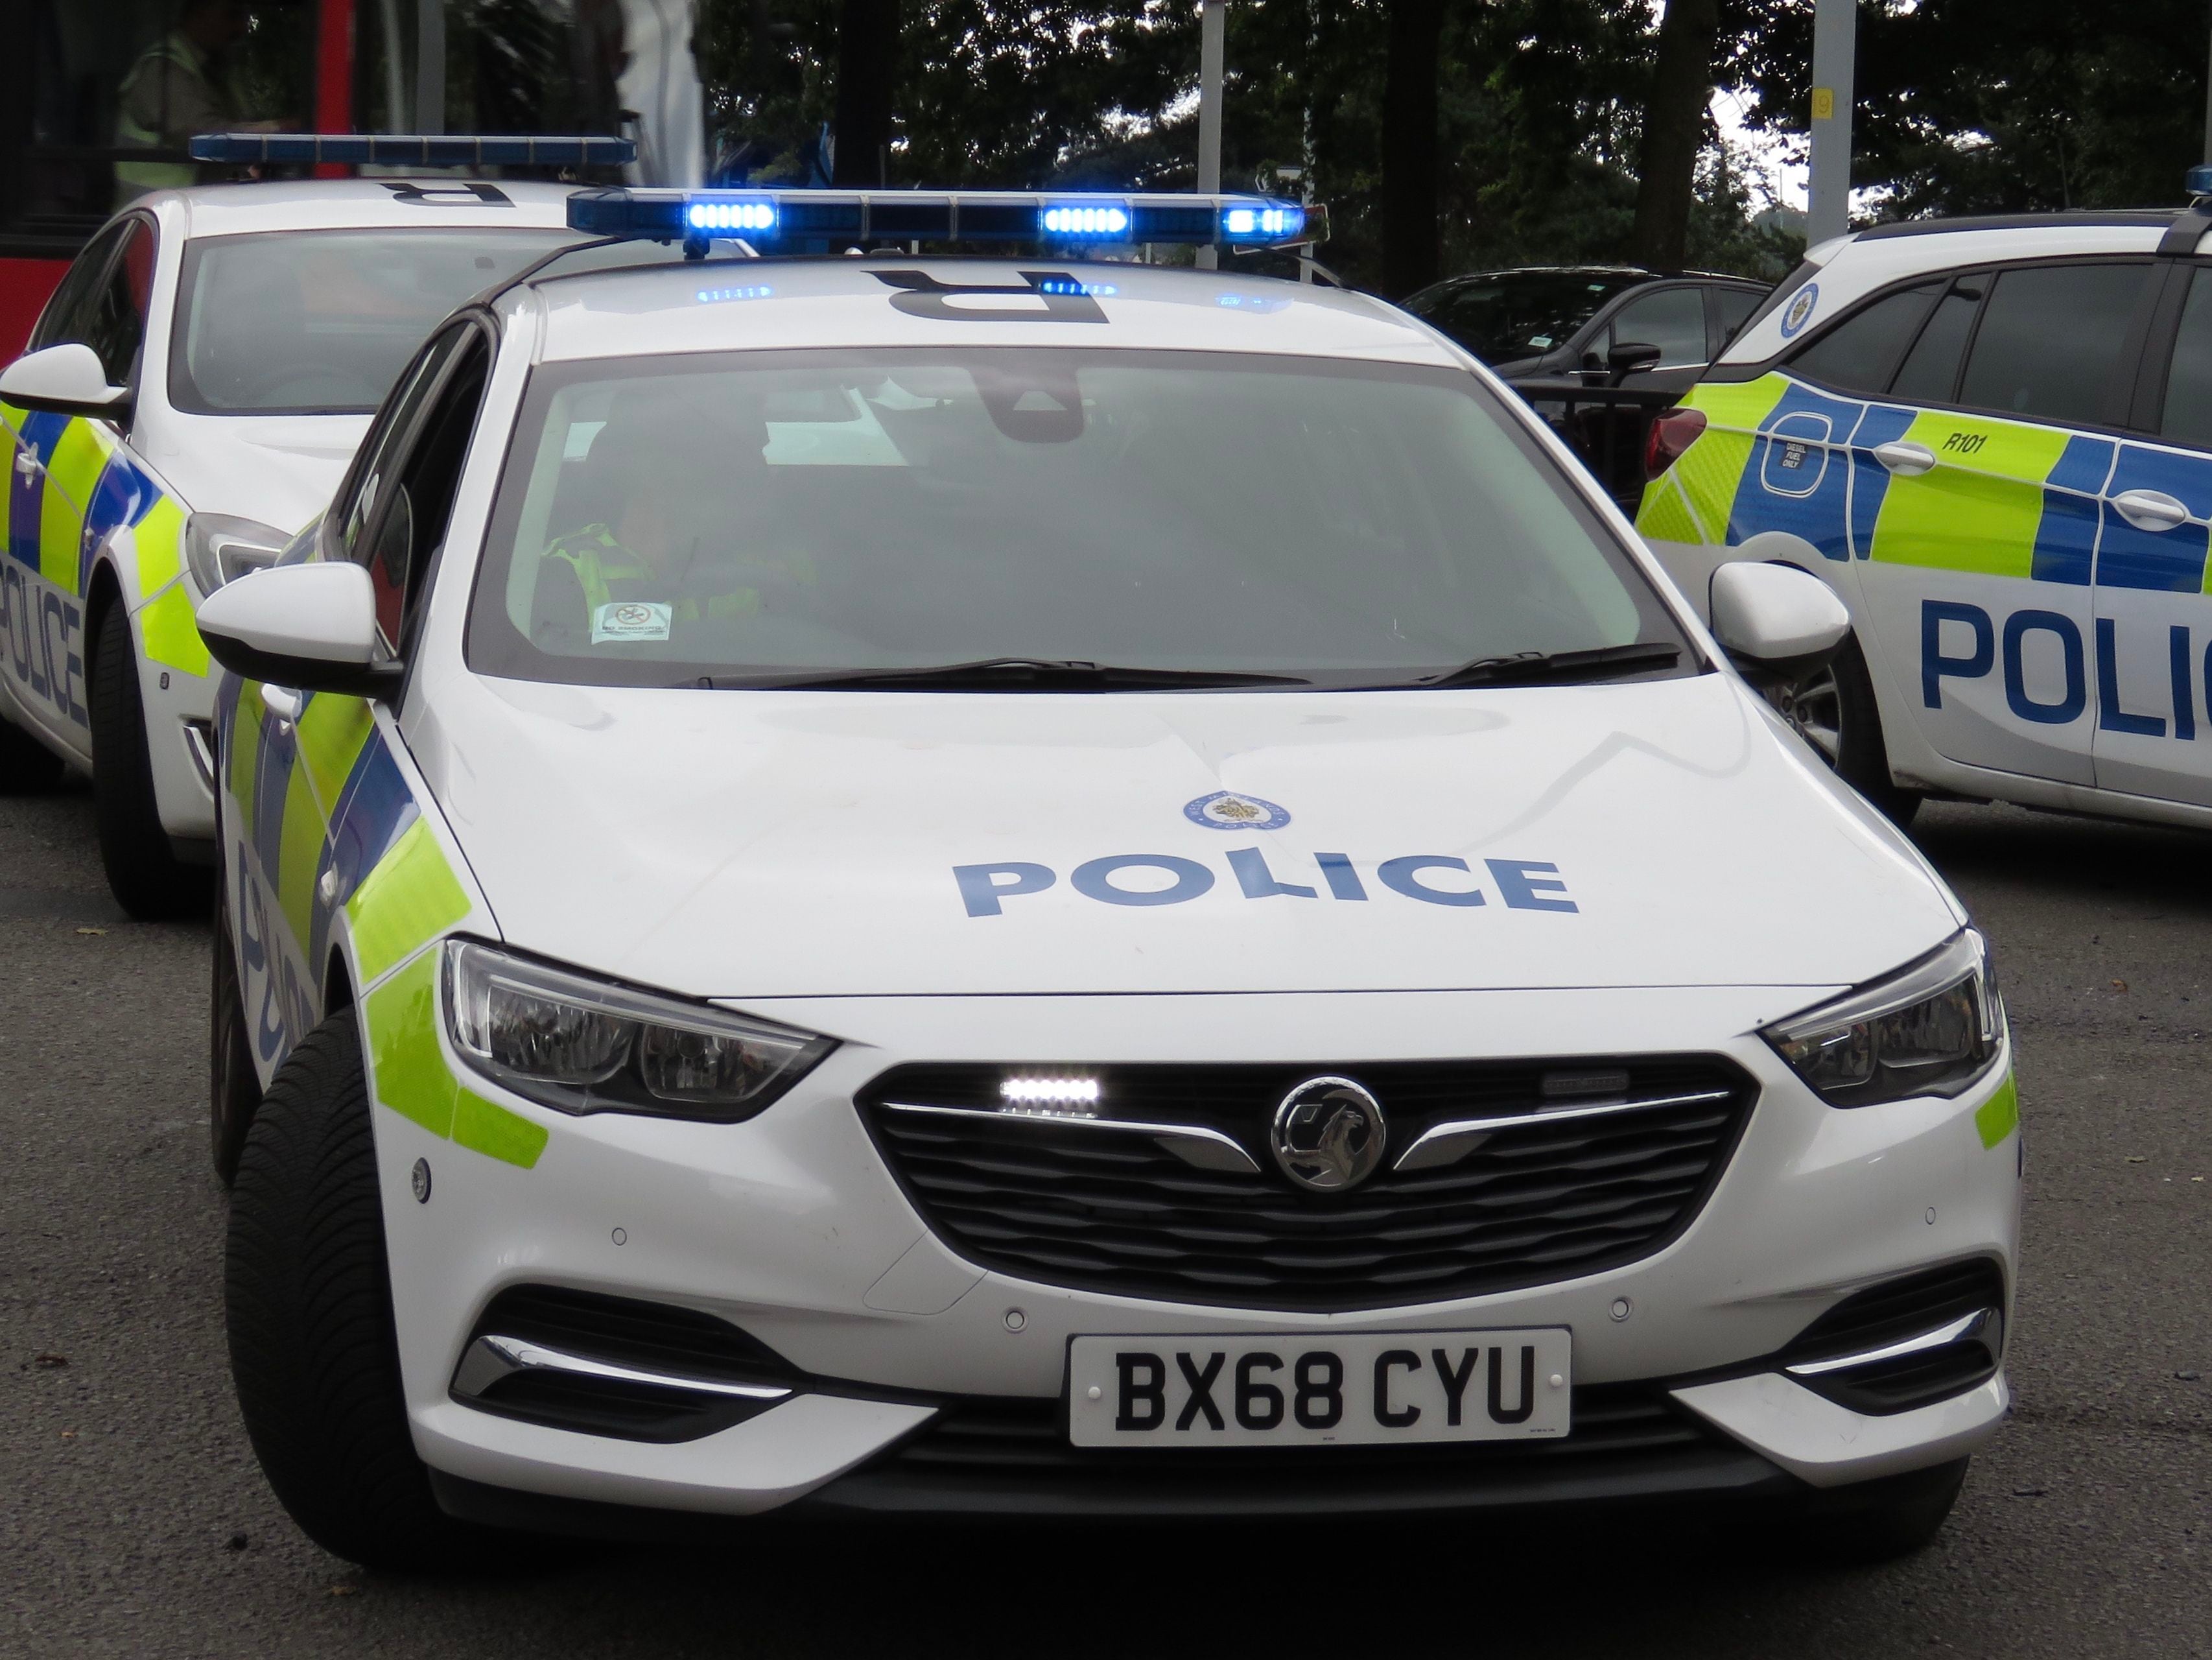 Suspected car thief arrested in Sedgley